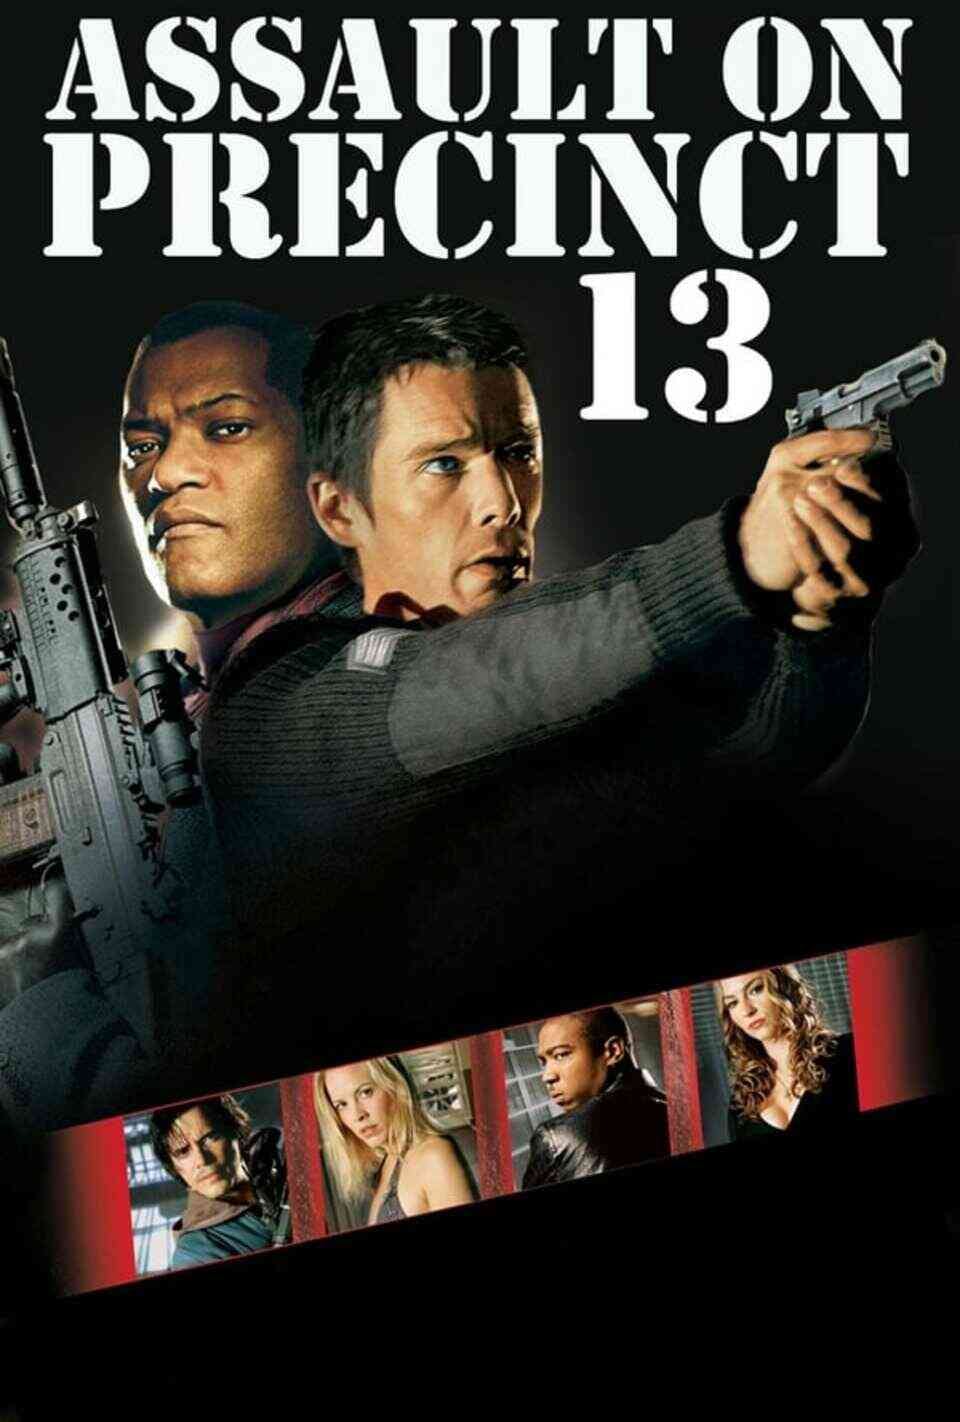 Read Assault on Precinct 13 screenplay.